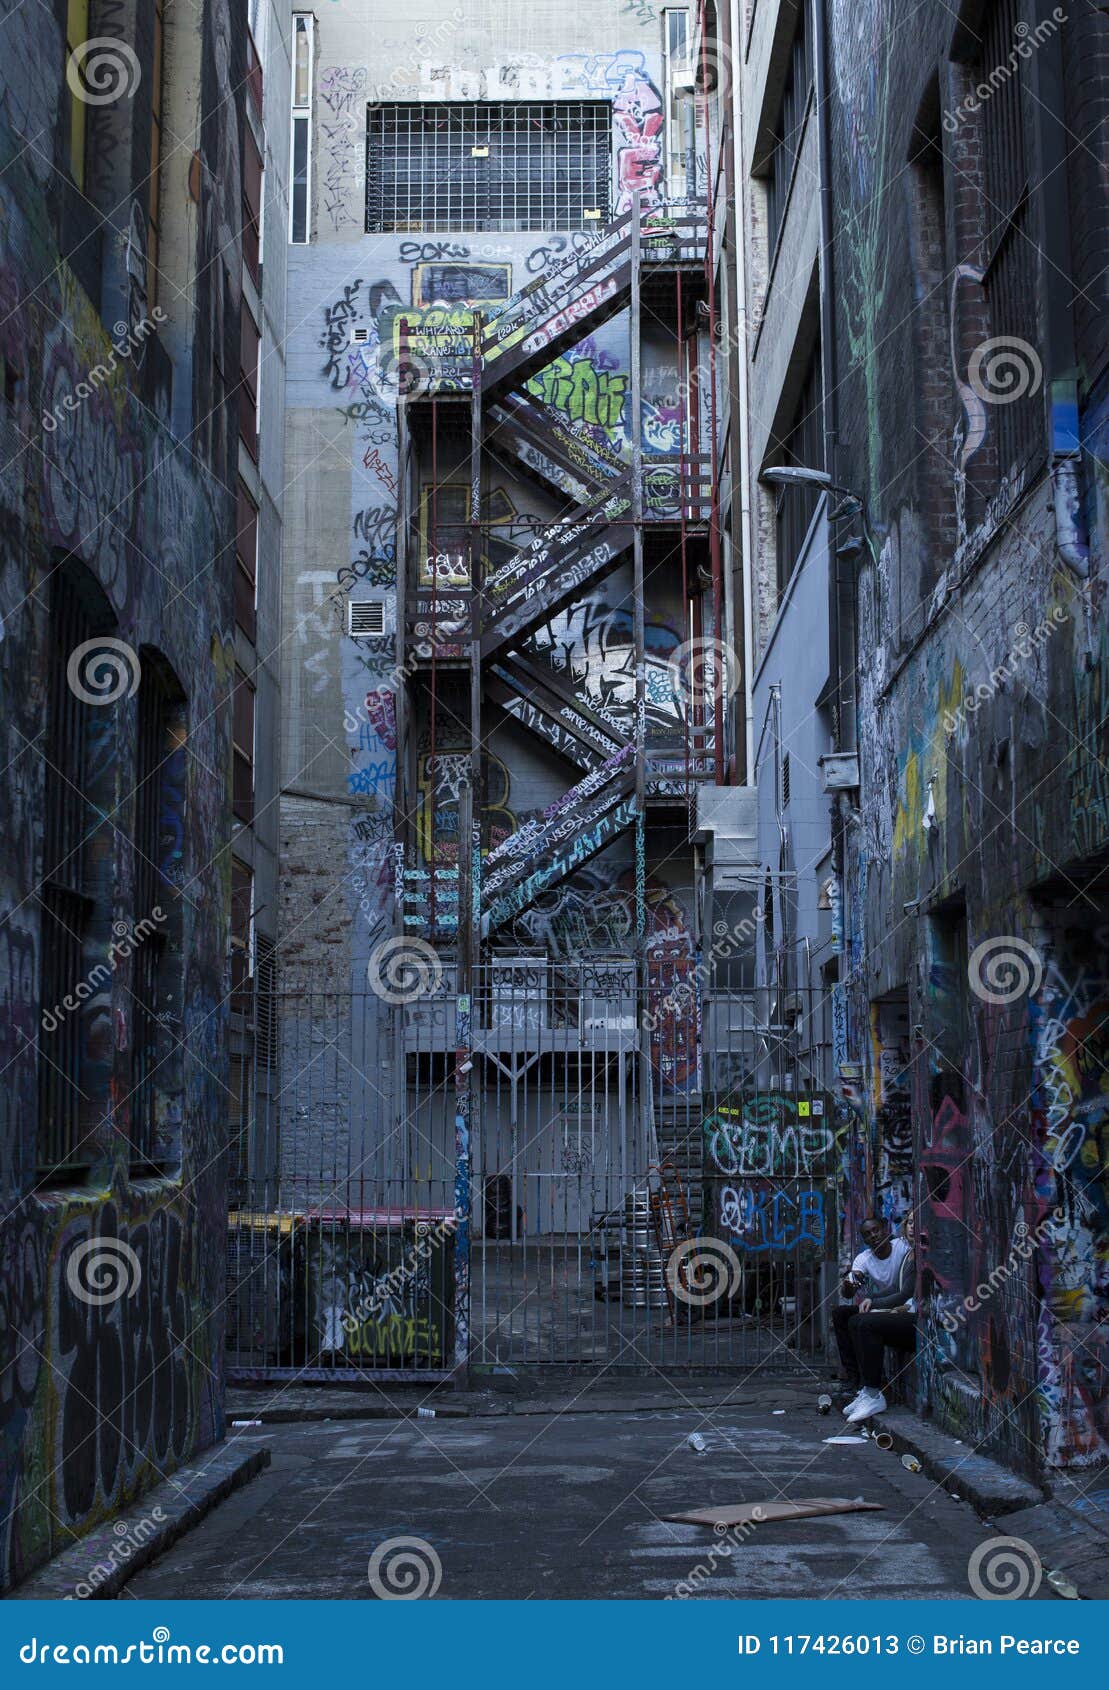 Melbourne Alley Wall Art Editorial Stock Photo Image Of Grafiti 117426013